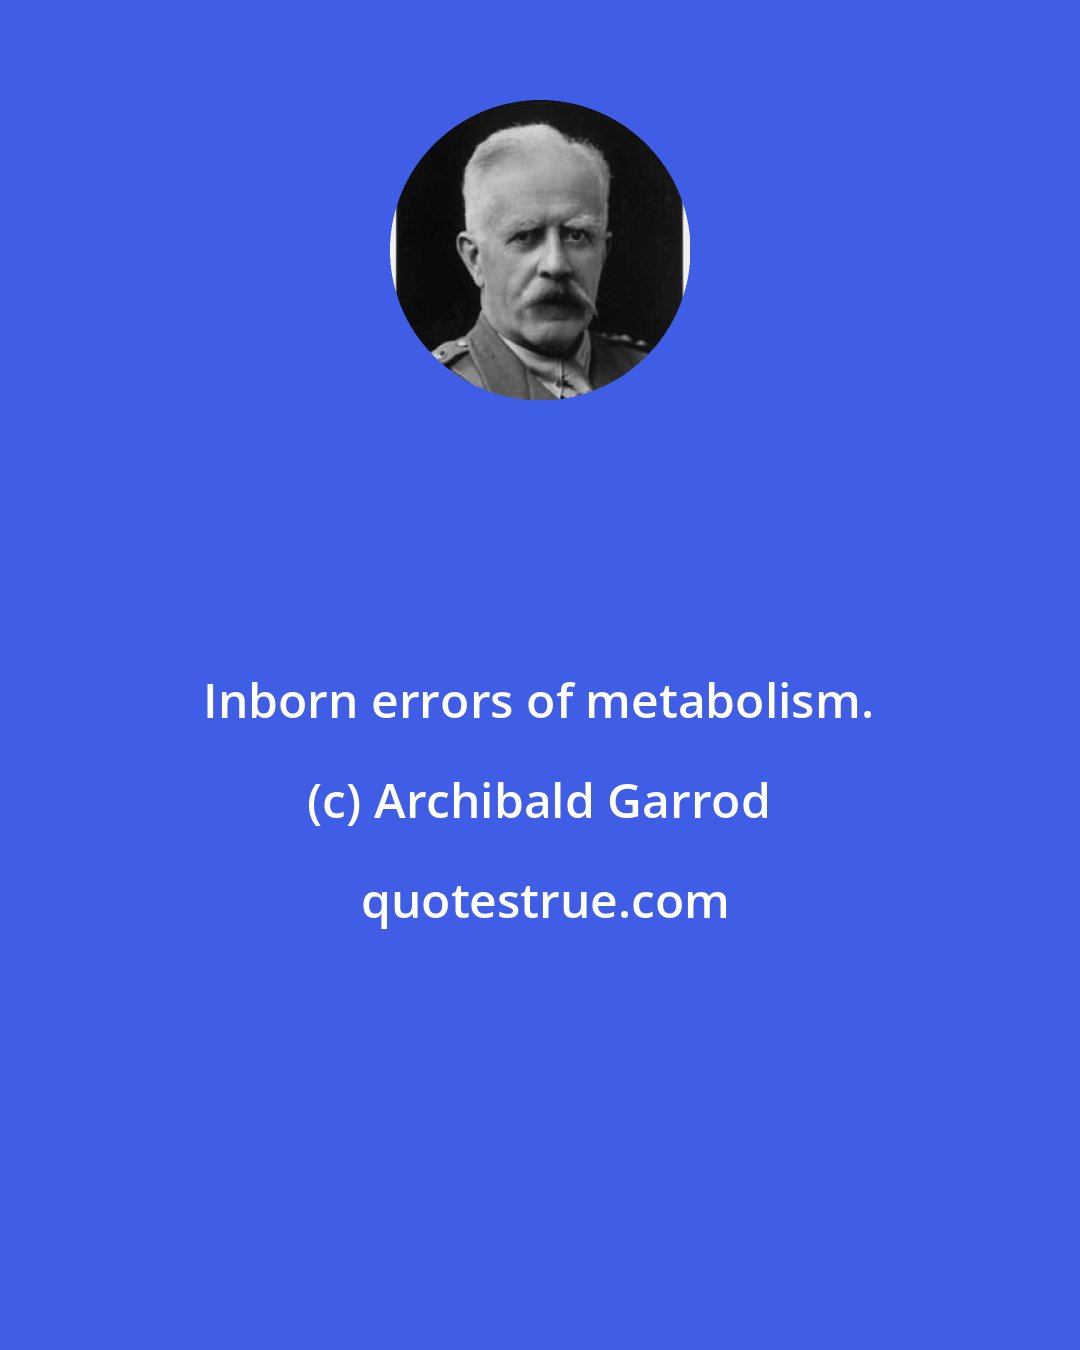 Archibald Garrod: Inborn errors of metabolism.